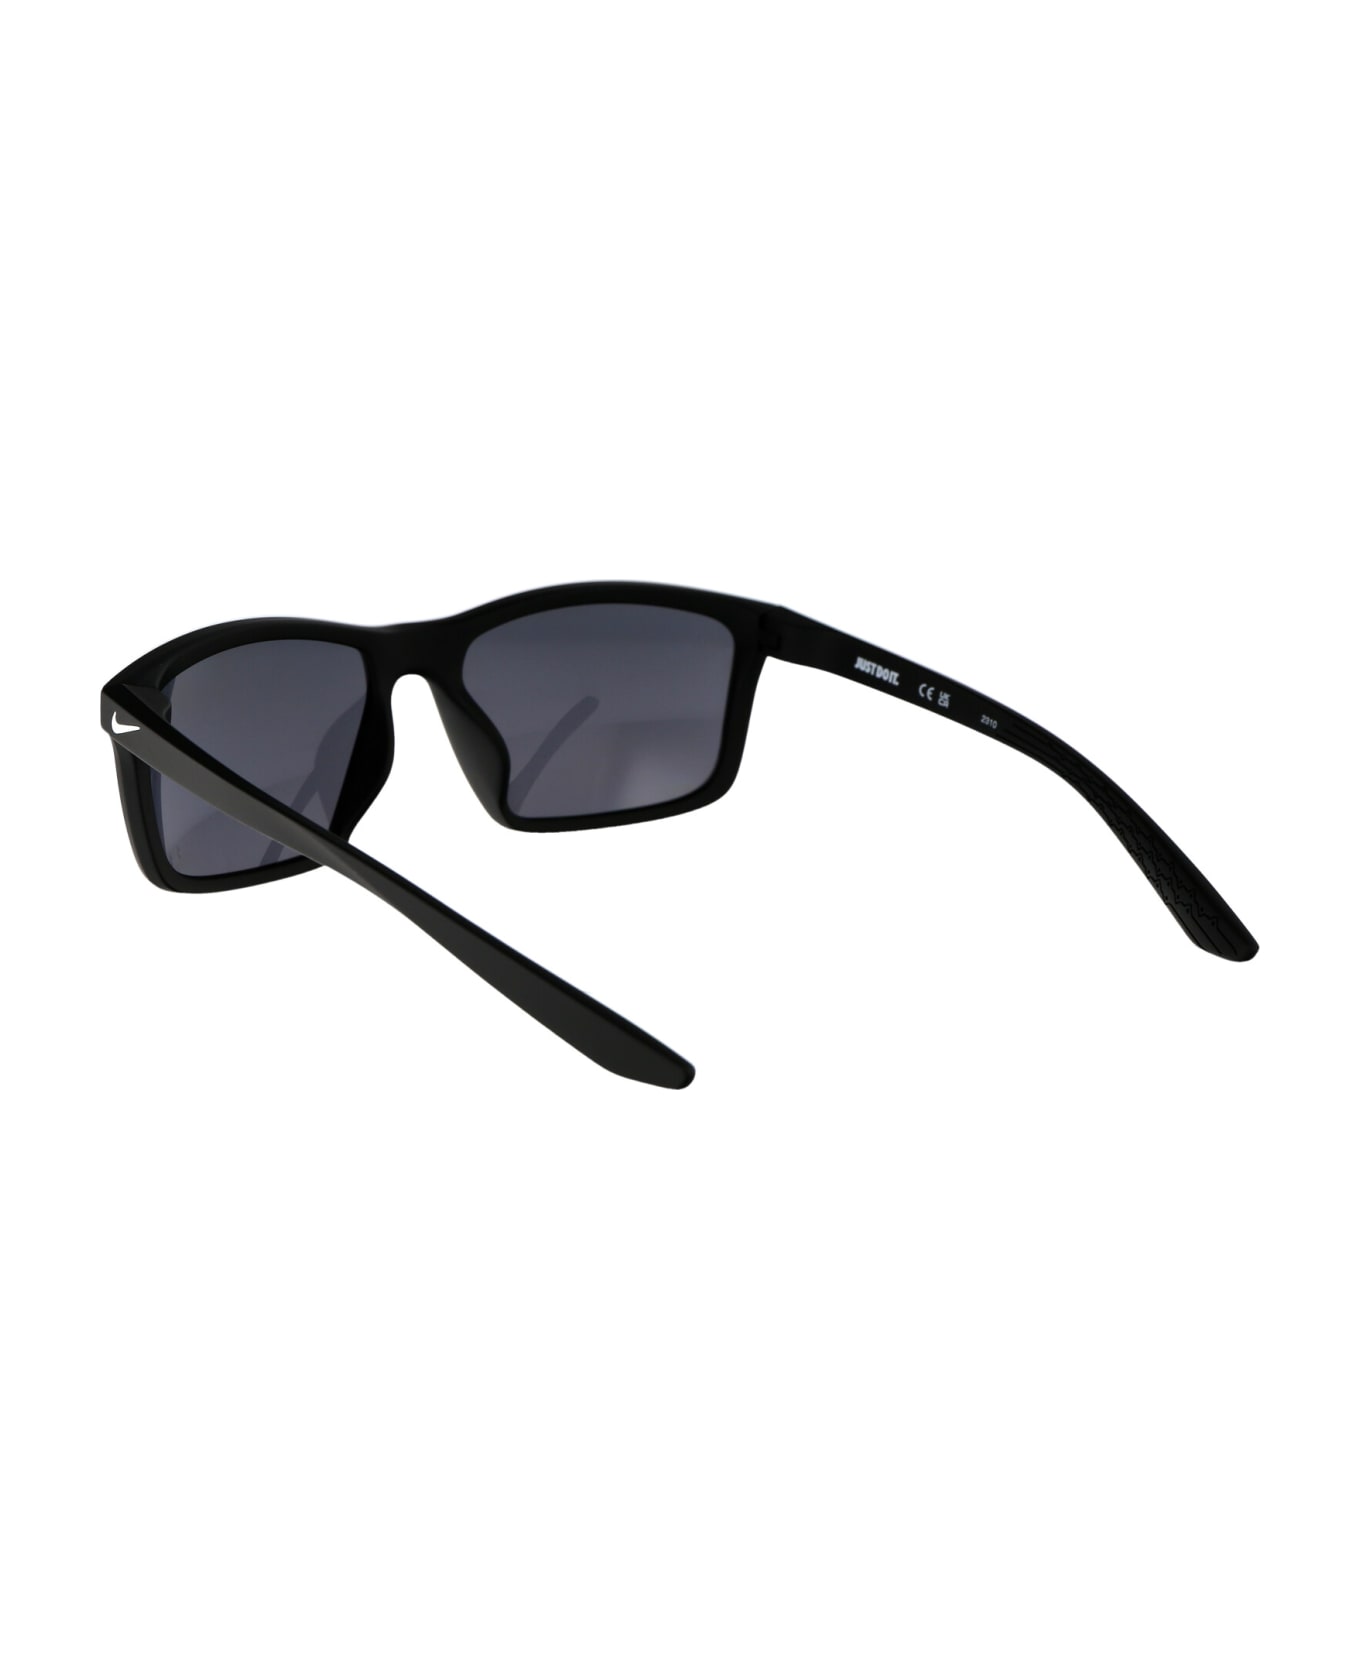 Nike Valiant Sunglasses - 010 DARK GREY MATTE BLACK